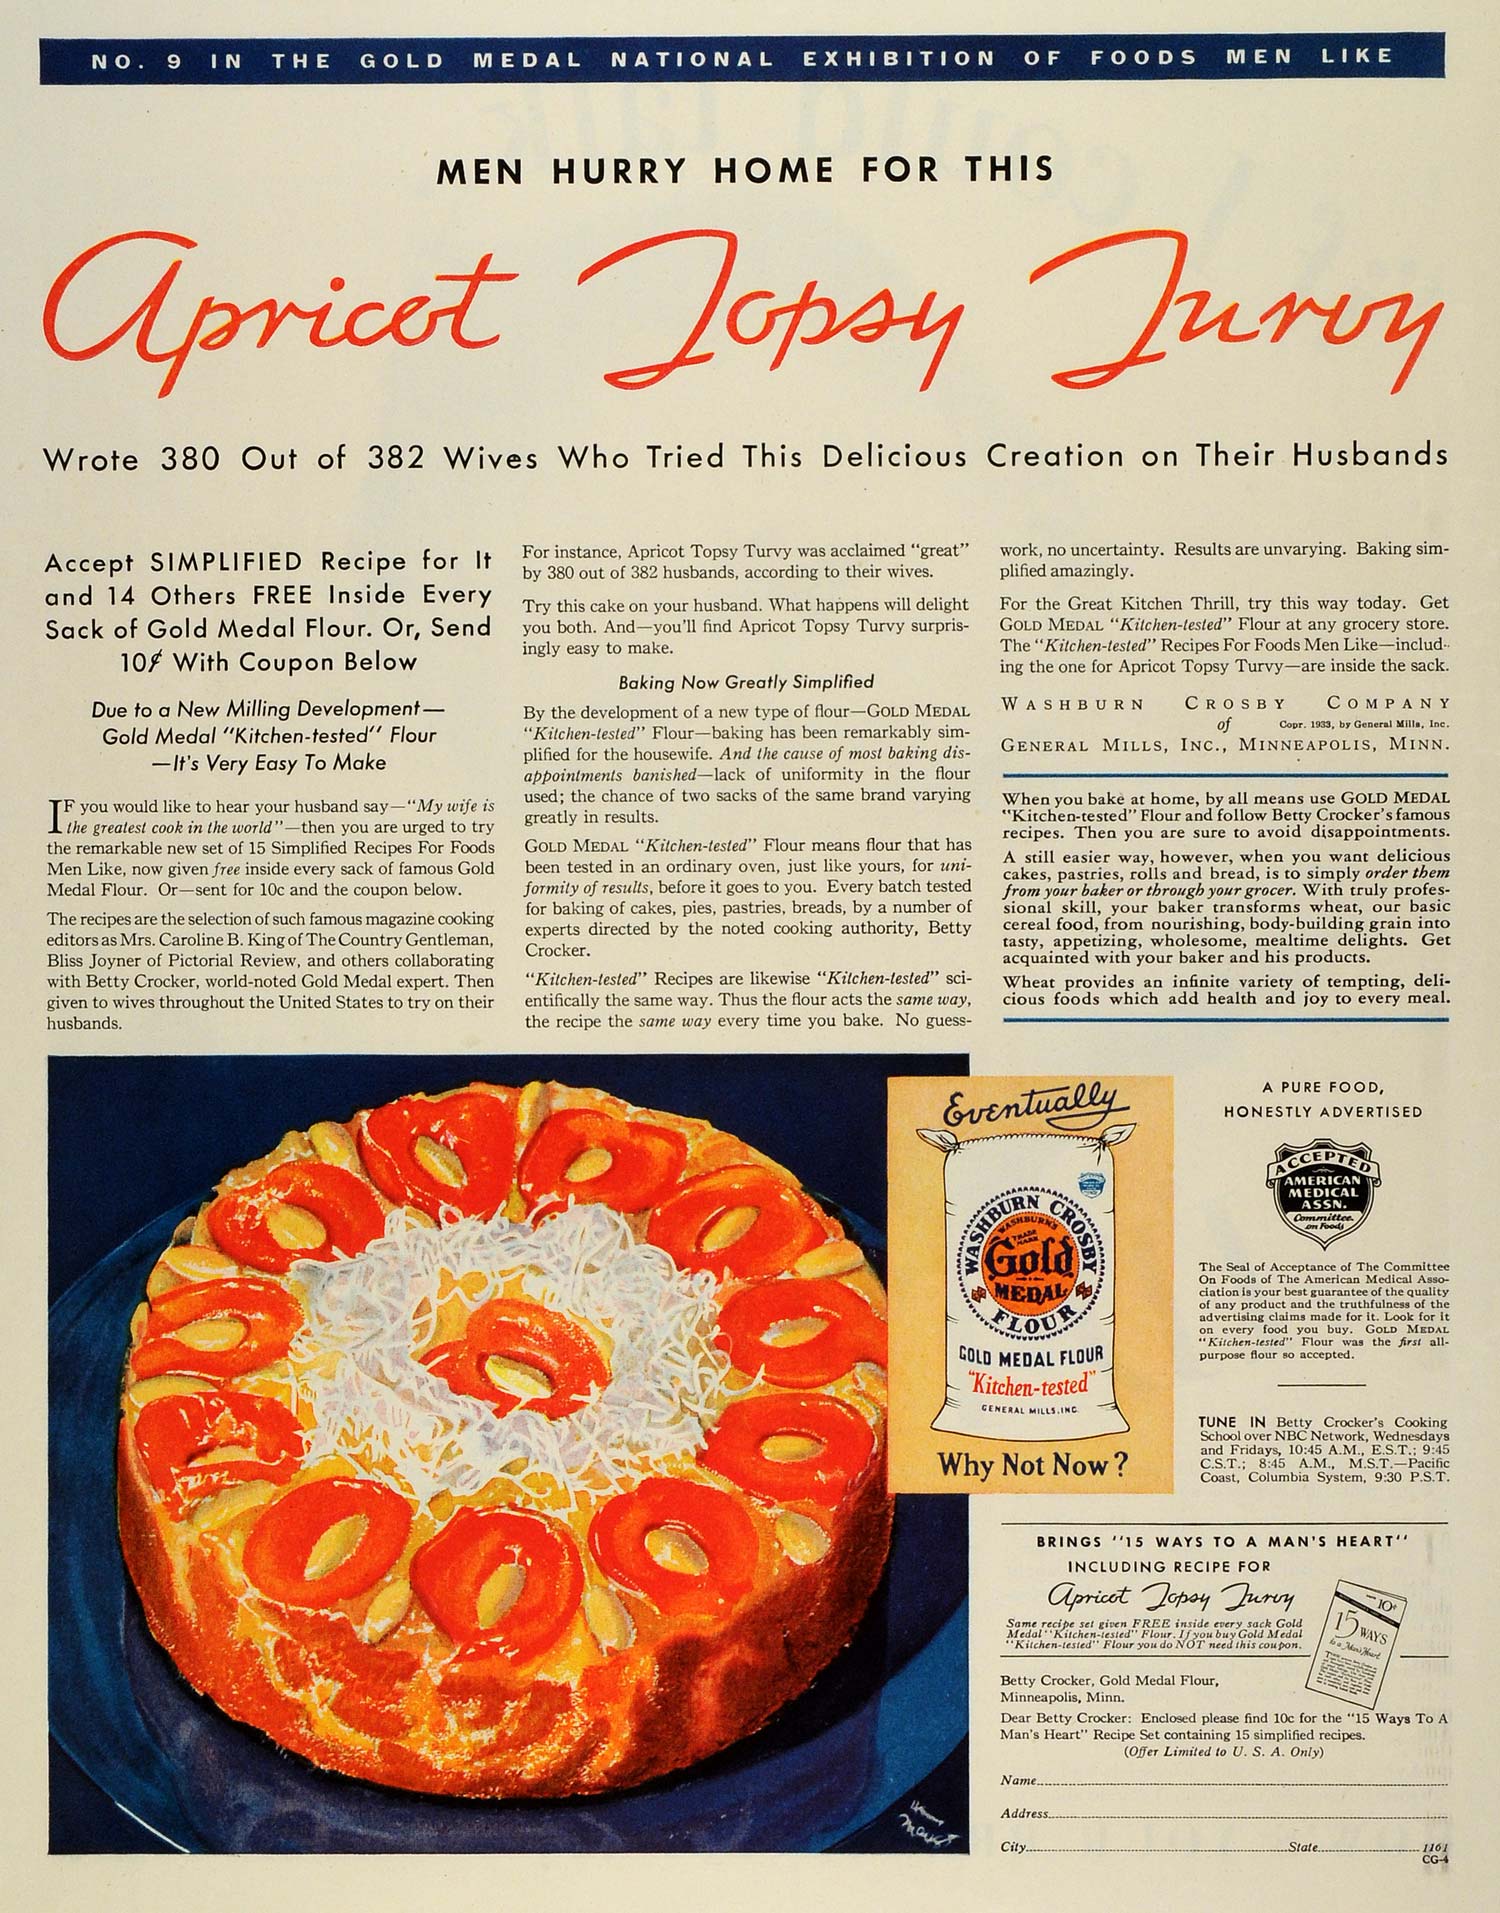 1933 Ad Washburn Crosby Gold Medal Flour Apricot Topsy Turvy Cake General MX7